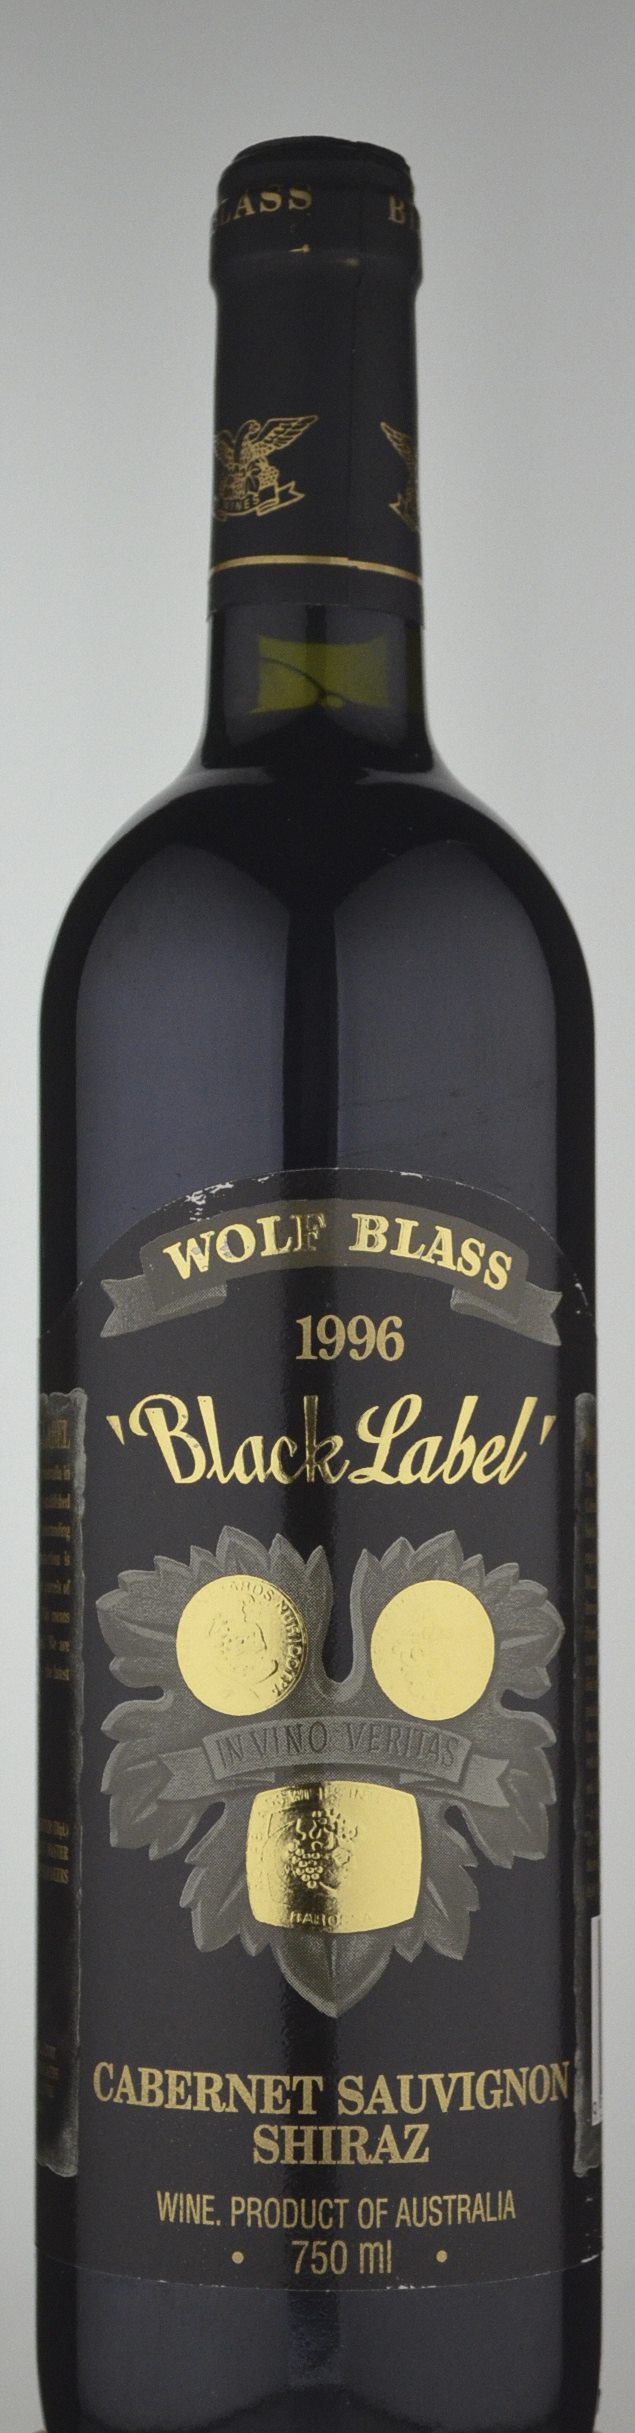 Wolf Blass Black Label Cabernet Shiraz 1996